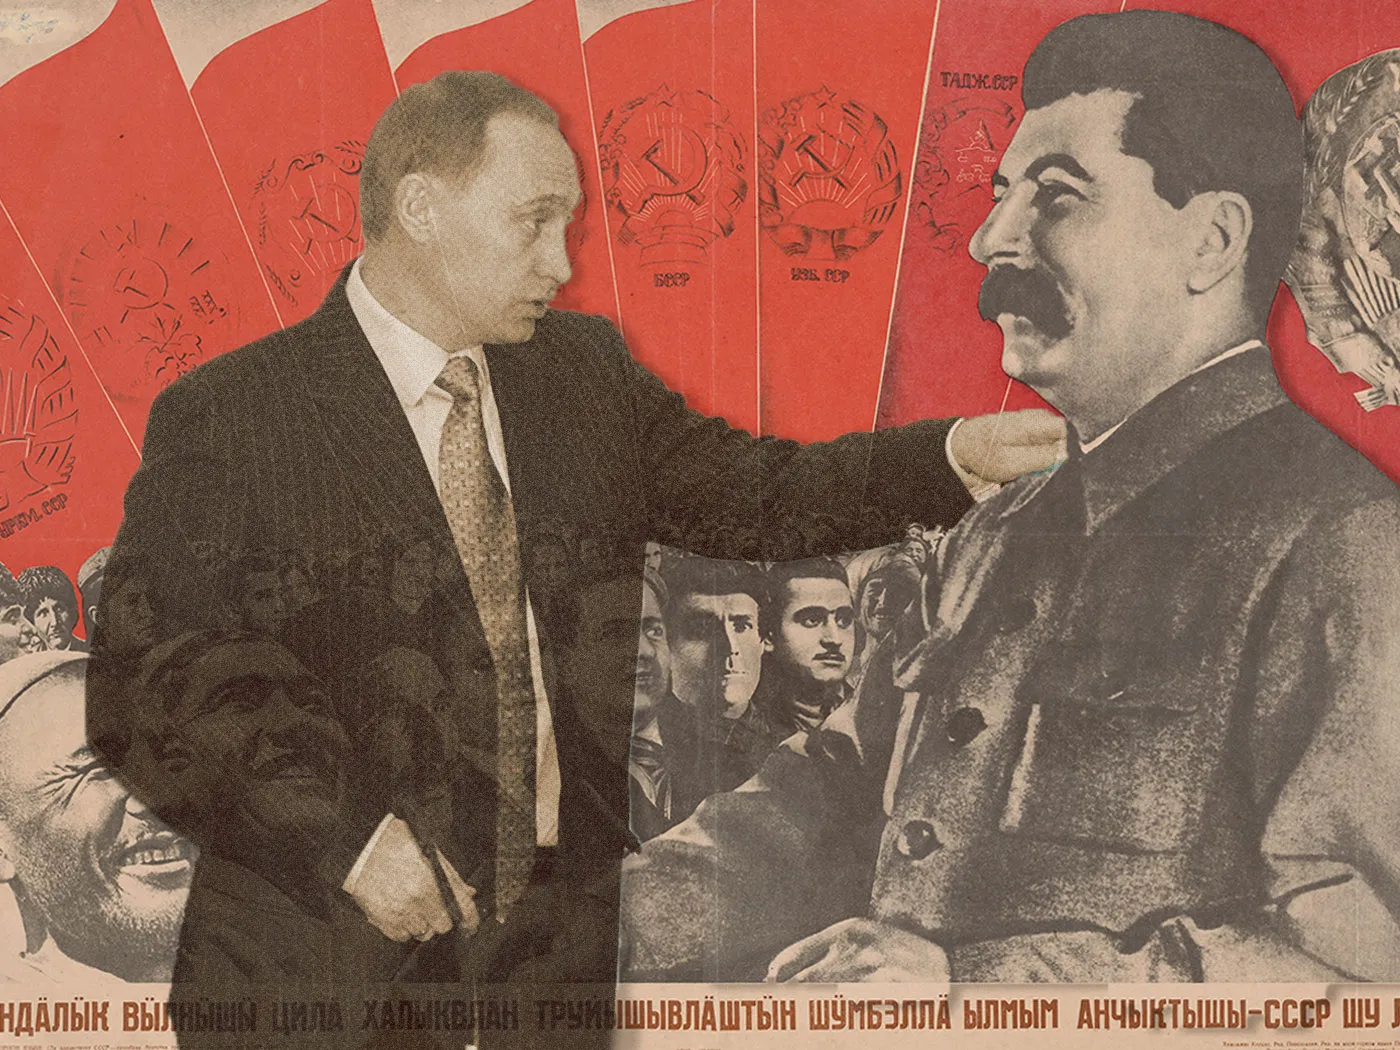 NEW Social Studies Classroom POSTER The Bolshevik Revolution Soviet Russia 